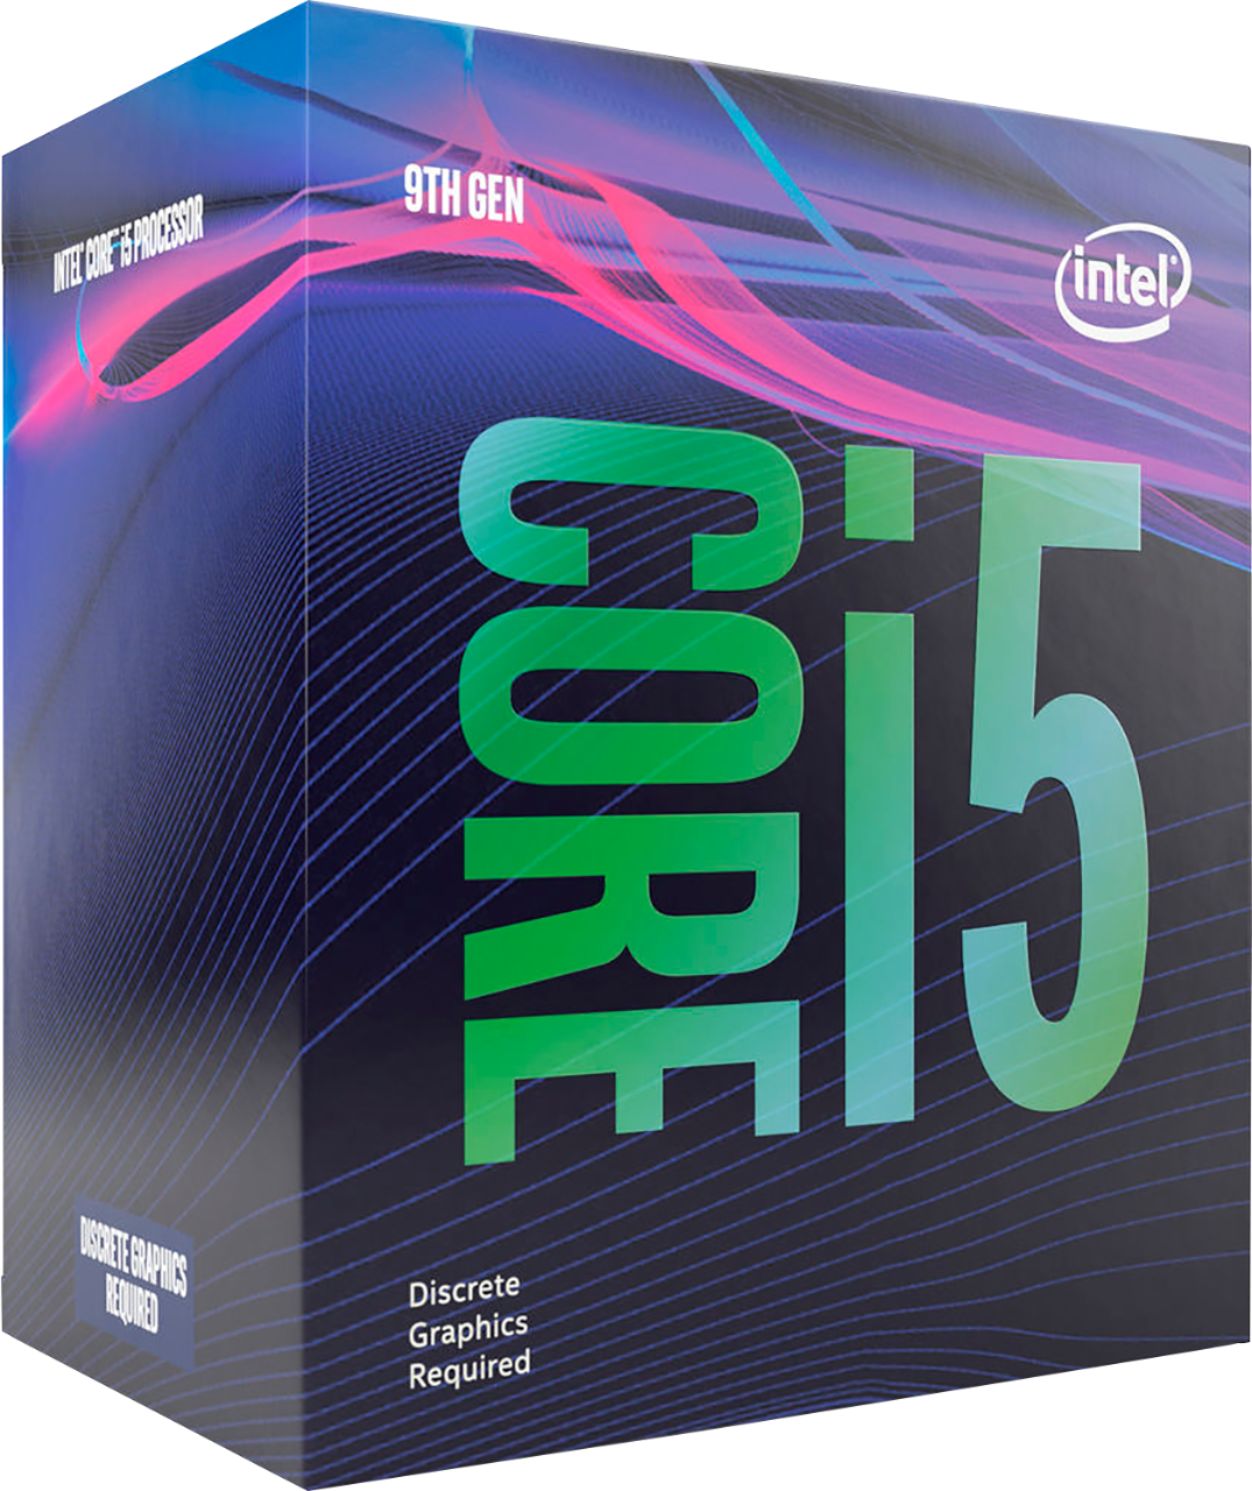 Customer Reviews Intel Core I5 9400f 9th Generation 6 Core 6 Thread 2